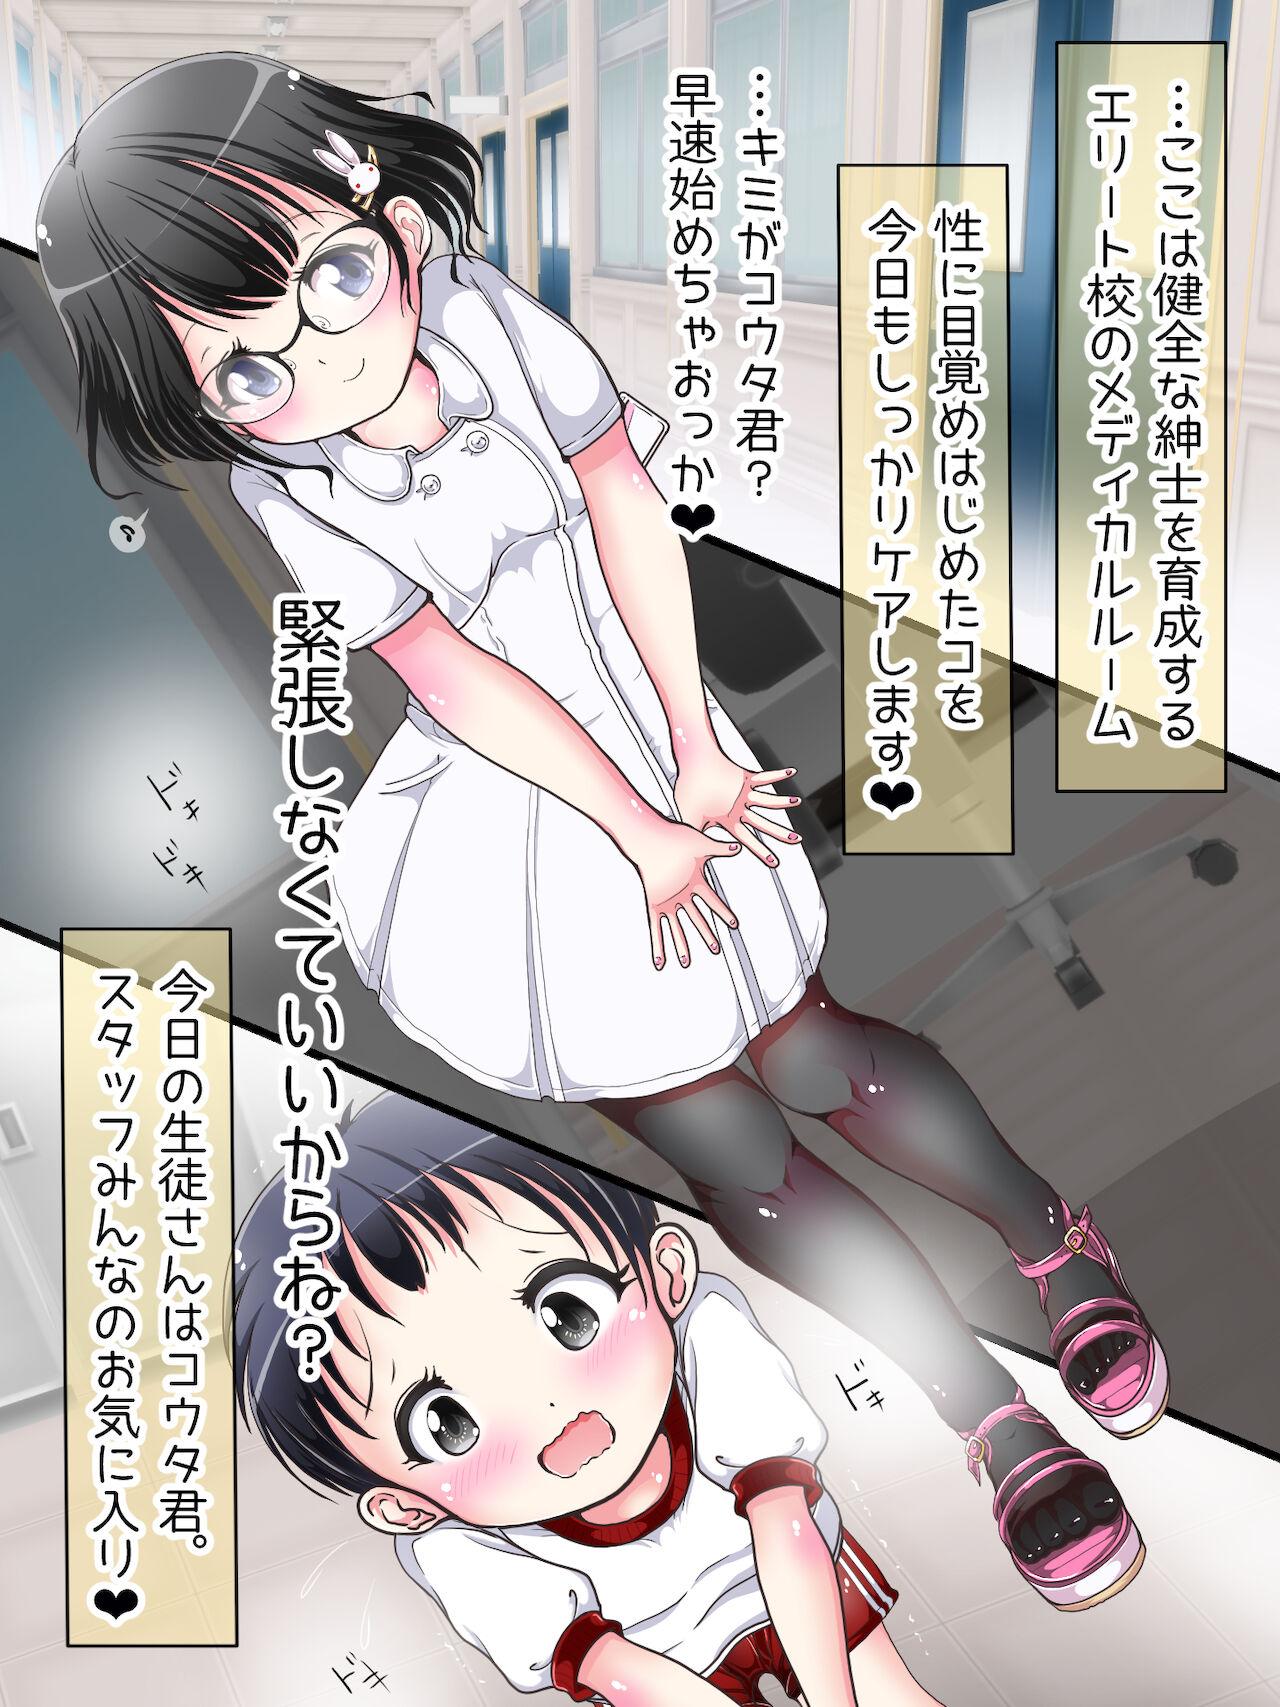 [Oneashi] One-Shota Footjob Lessons: Foot-Stroked by Nurses 201